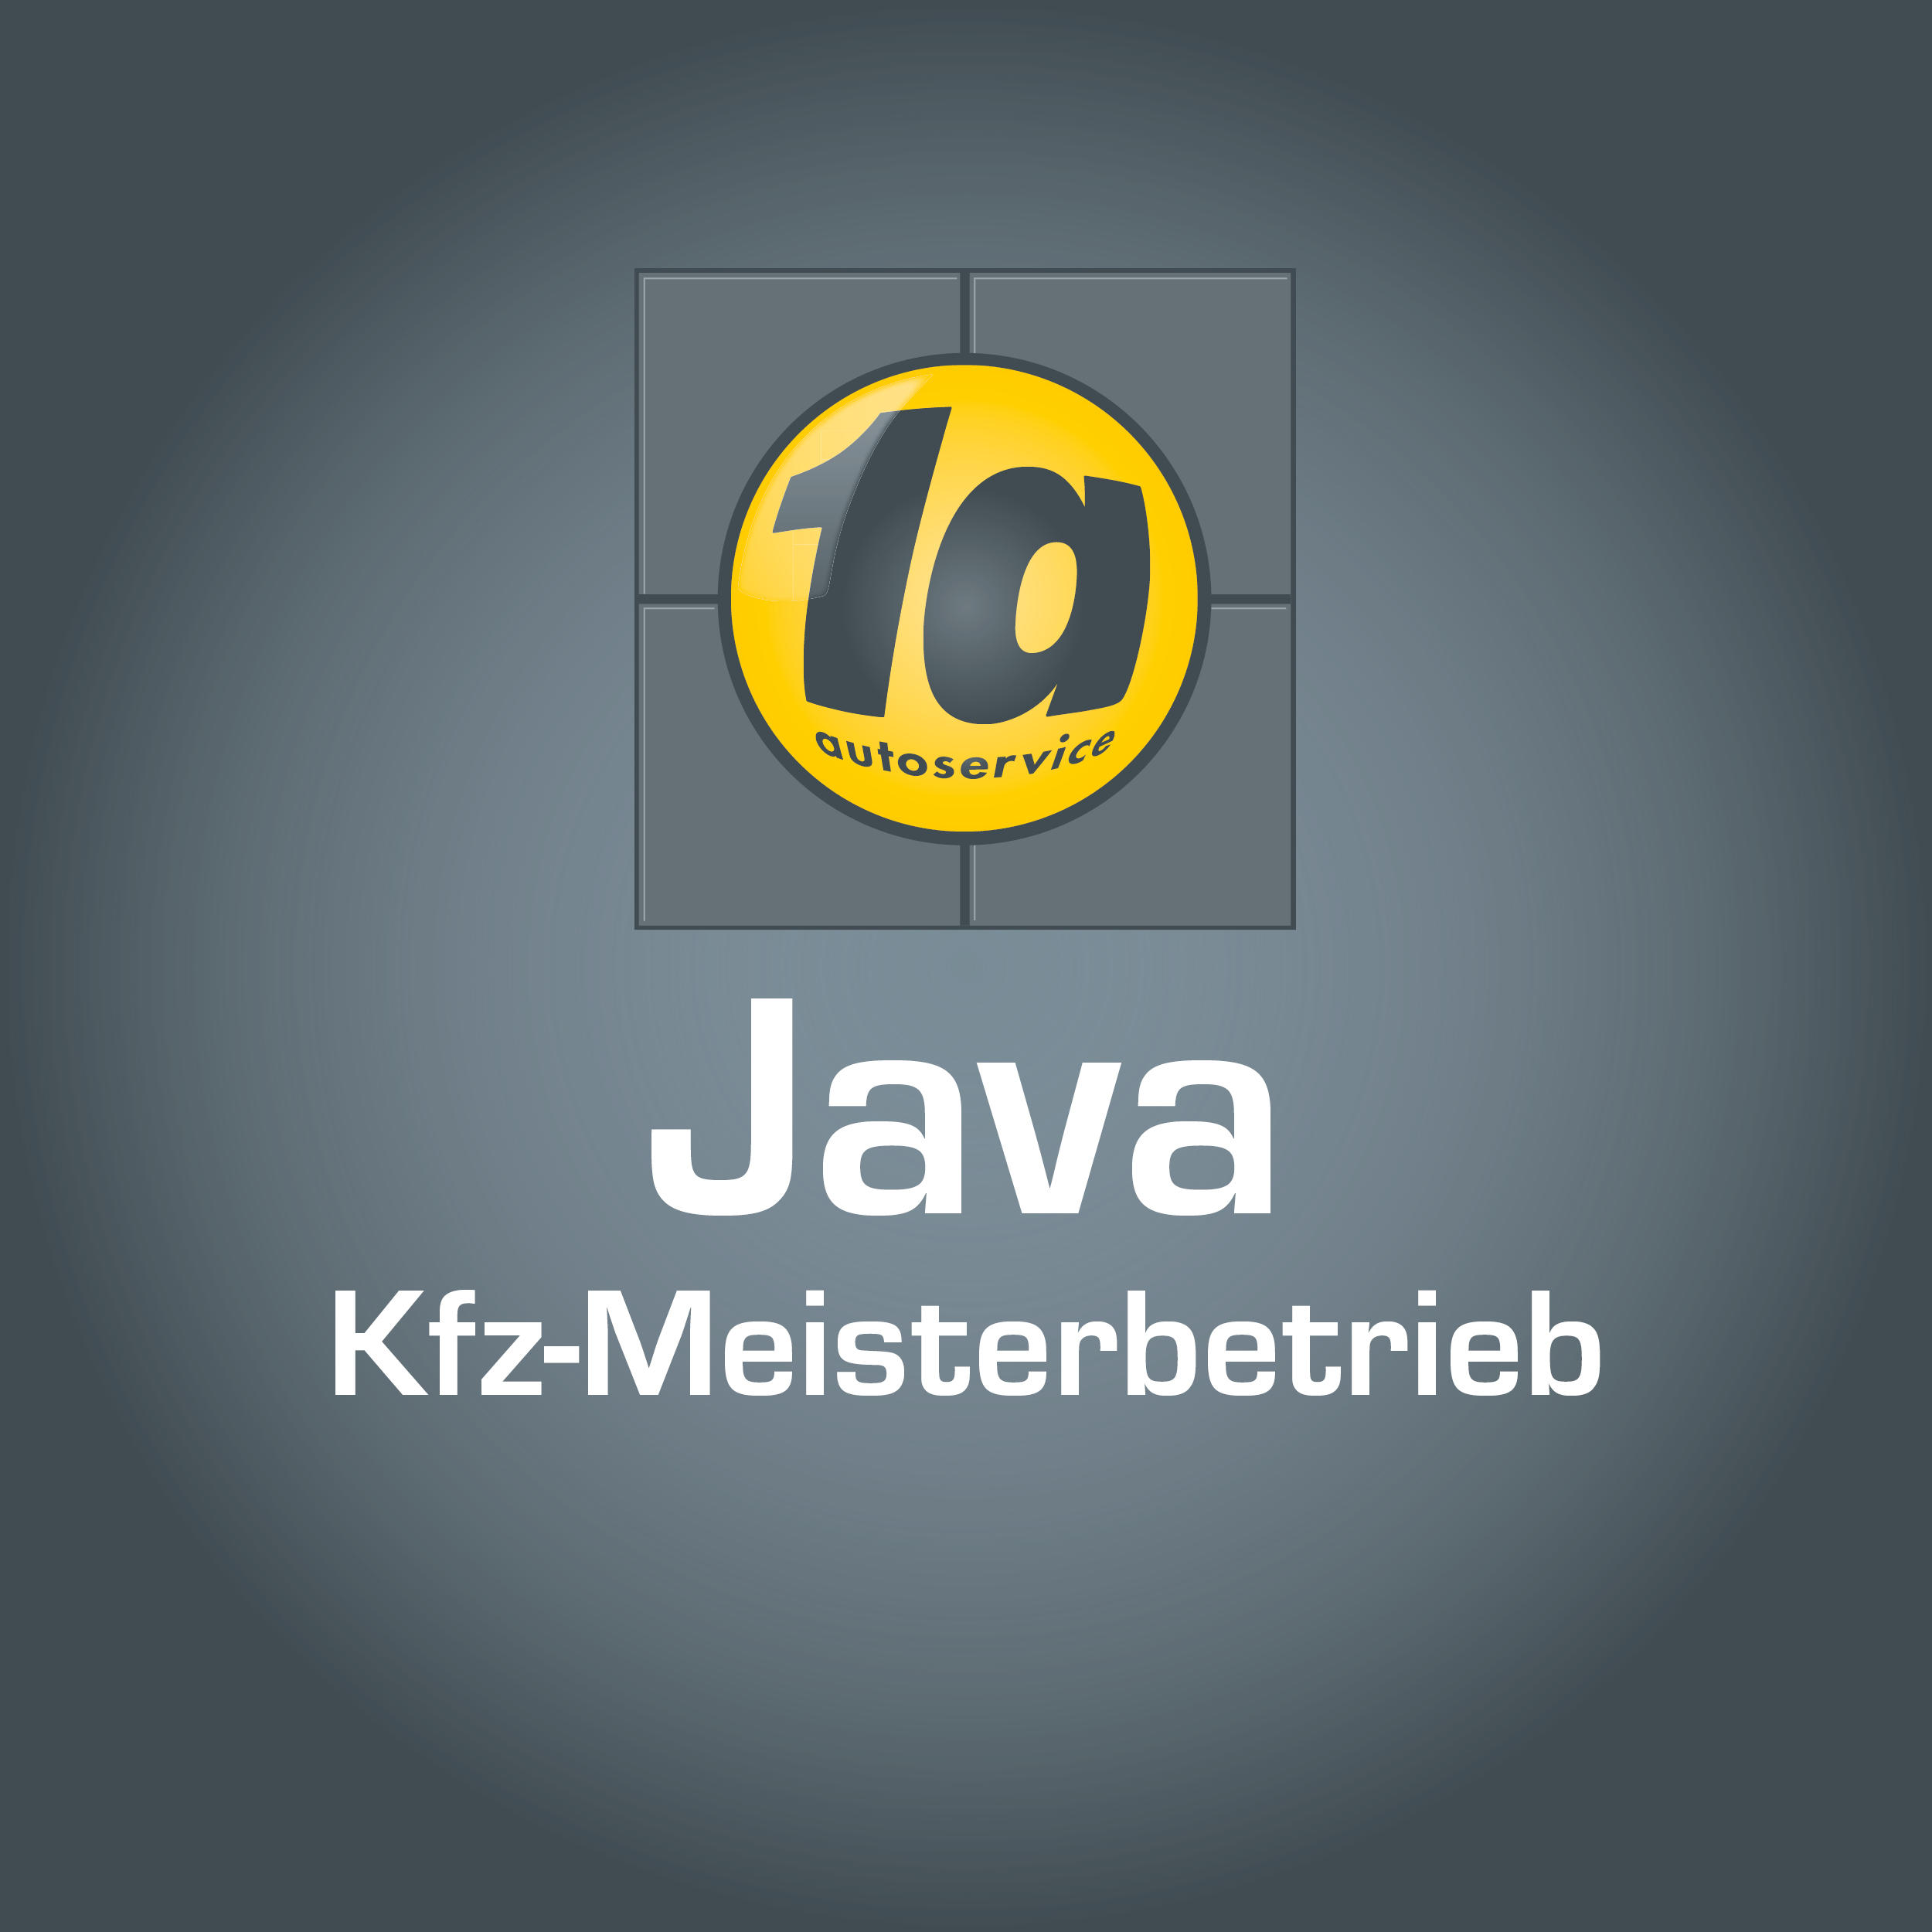 1a Java Kfz-Meisterbetrieb  